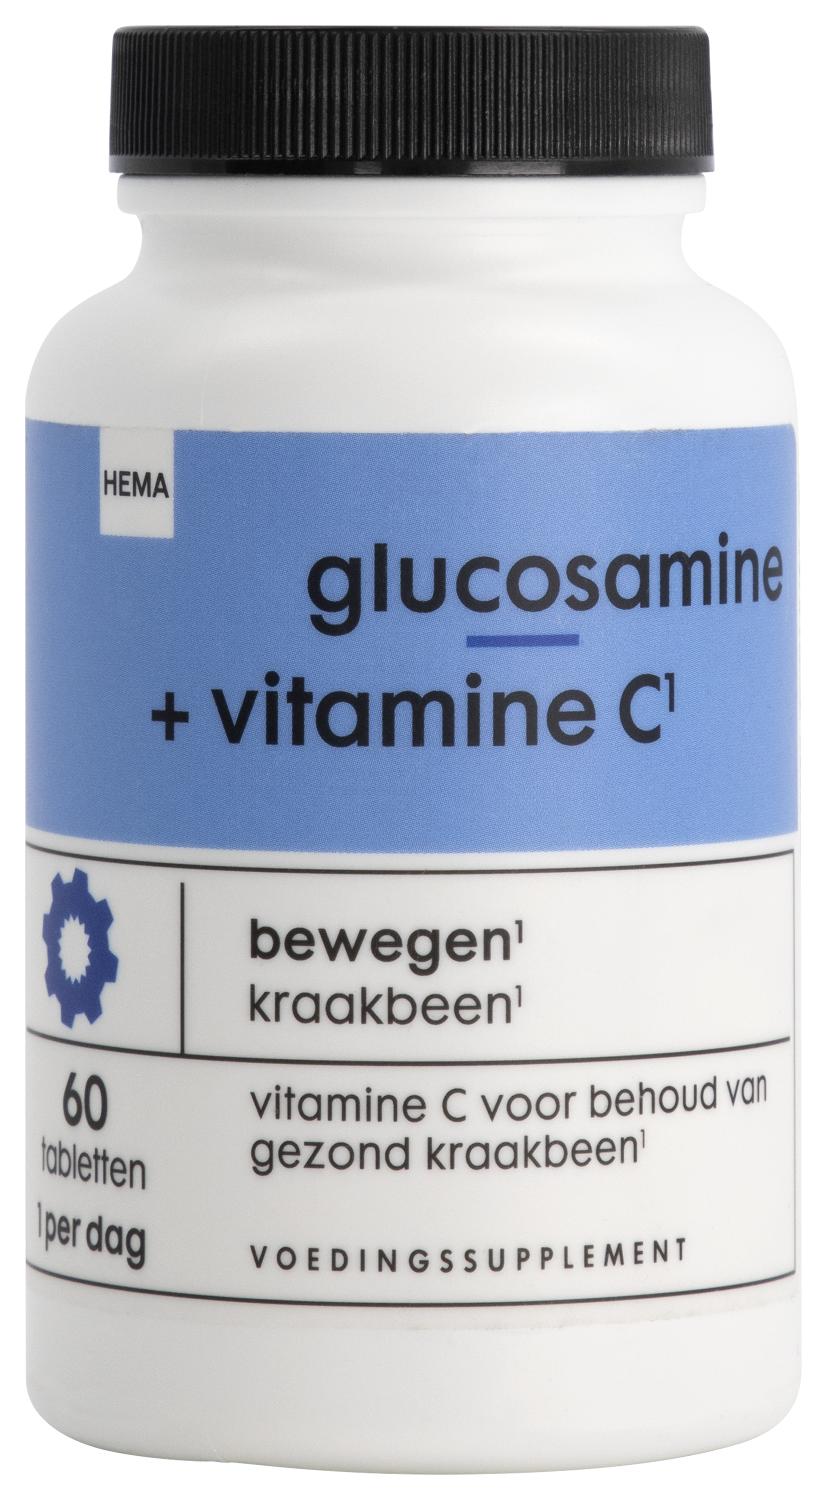 glucosamine + vitamine C 60 stuks HEMA